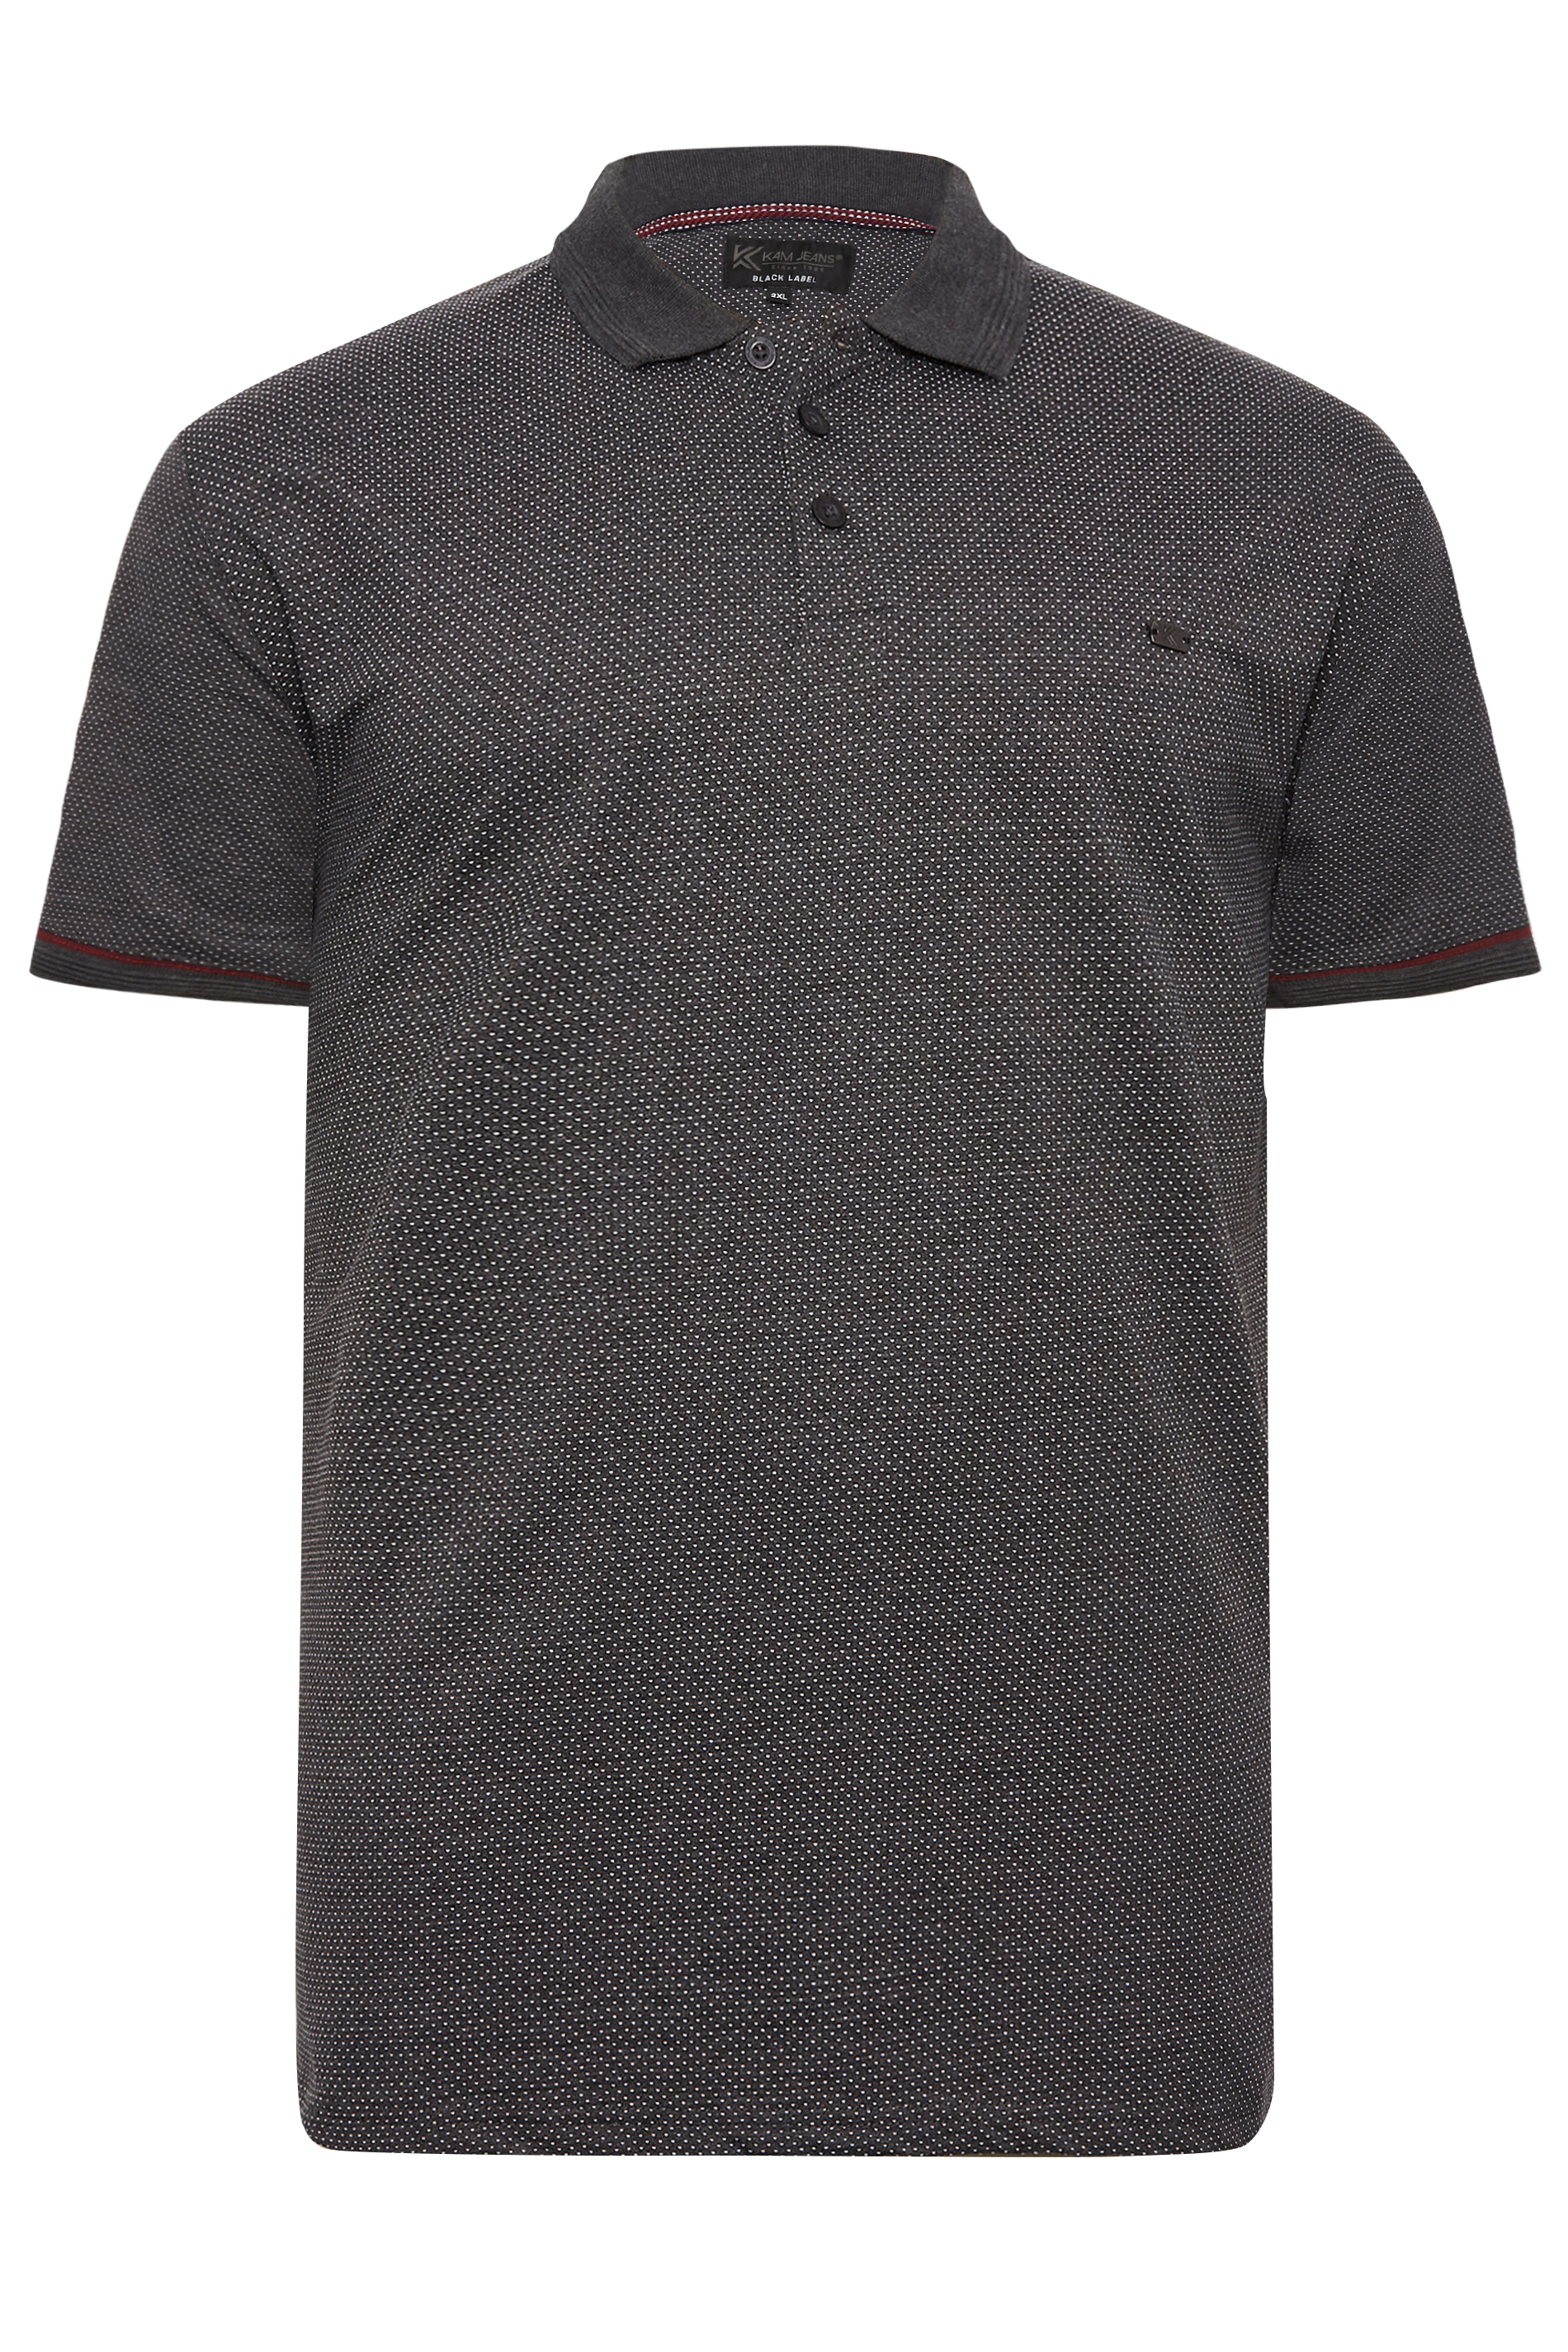 KAM Big & Tall Mens Charcoal Grey Polka Dot Polo Shirt | BadRhino  3